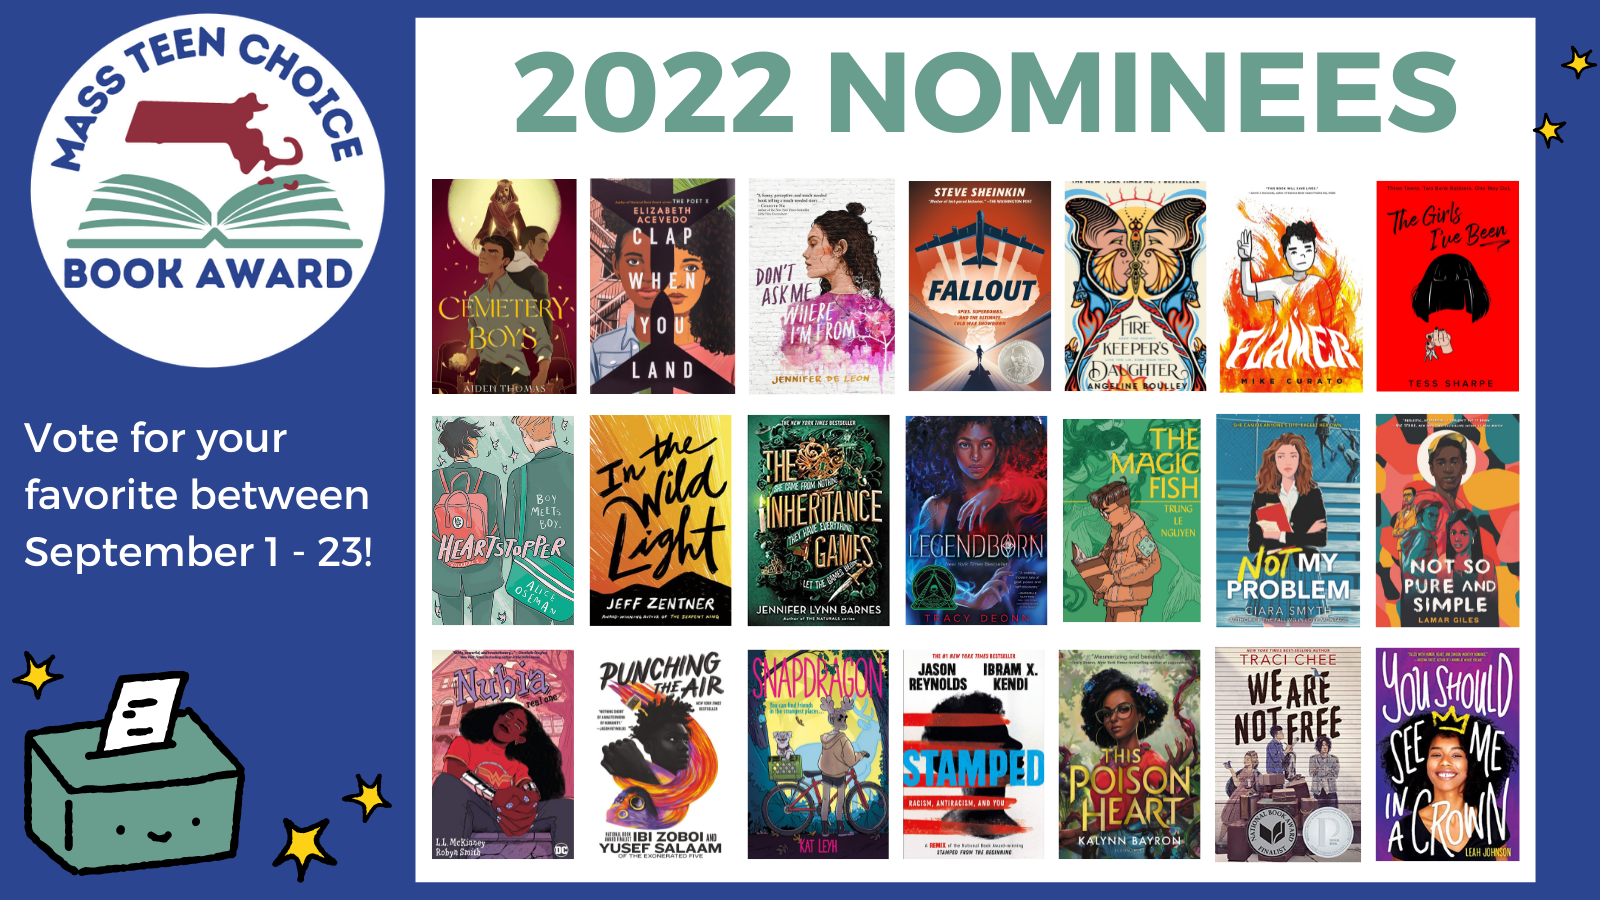 Massachusetts Teen Choice Book Award 2022 Nominee book covers